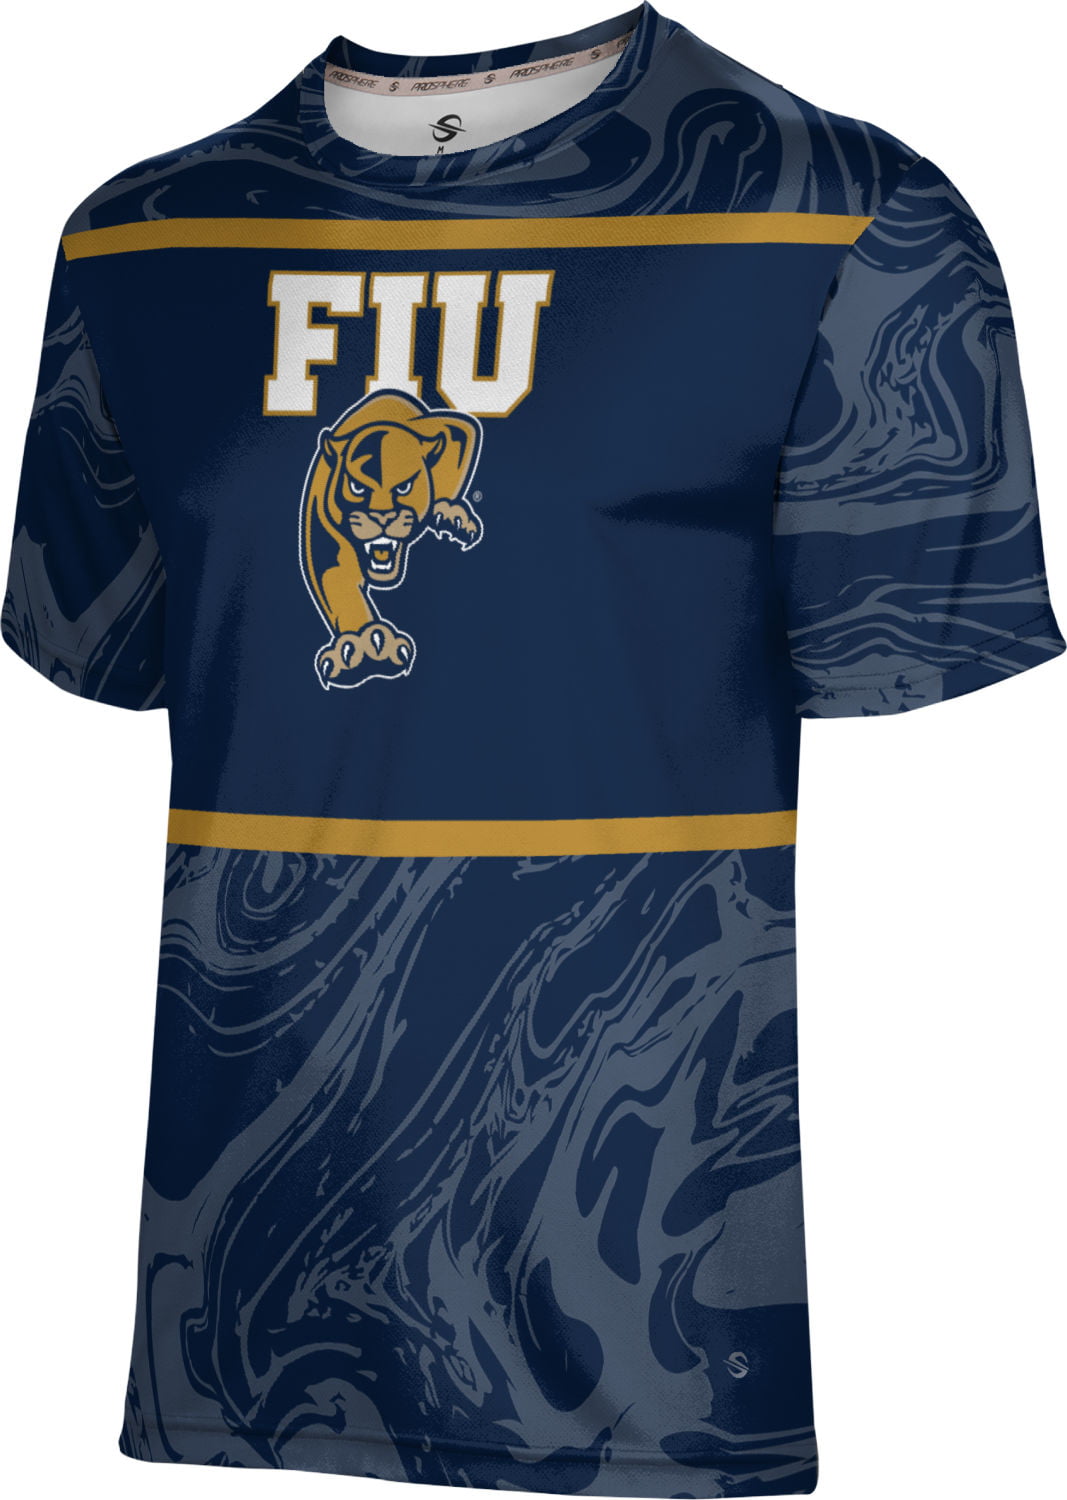 Ripple ProSphere University of Central Florida Boys T-Shirt 